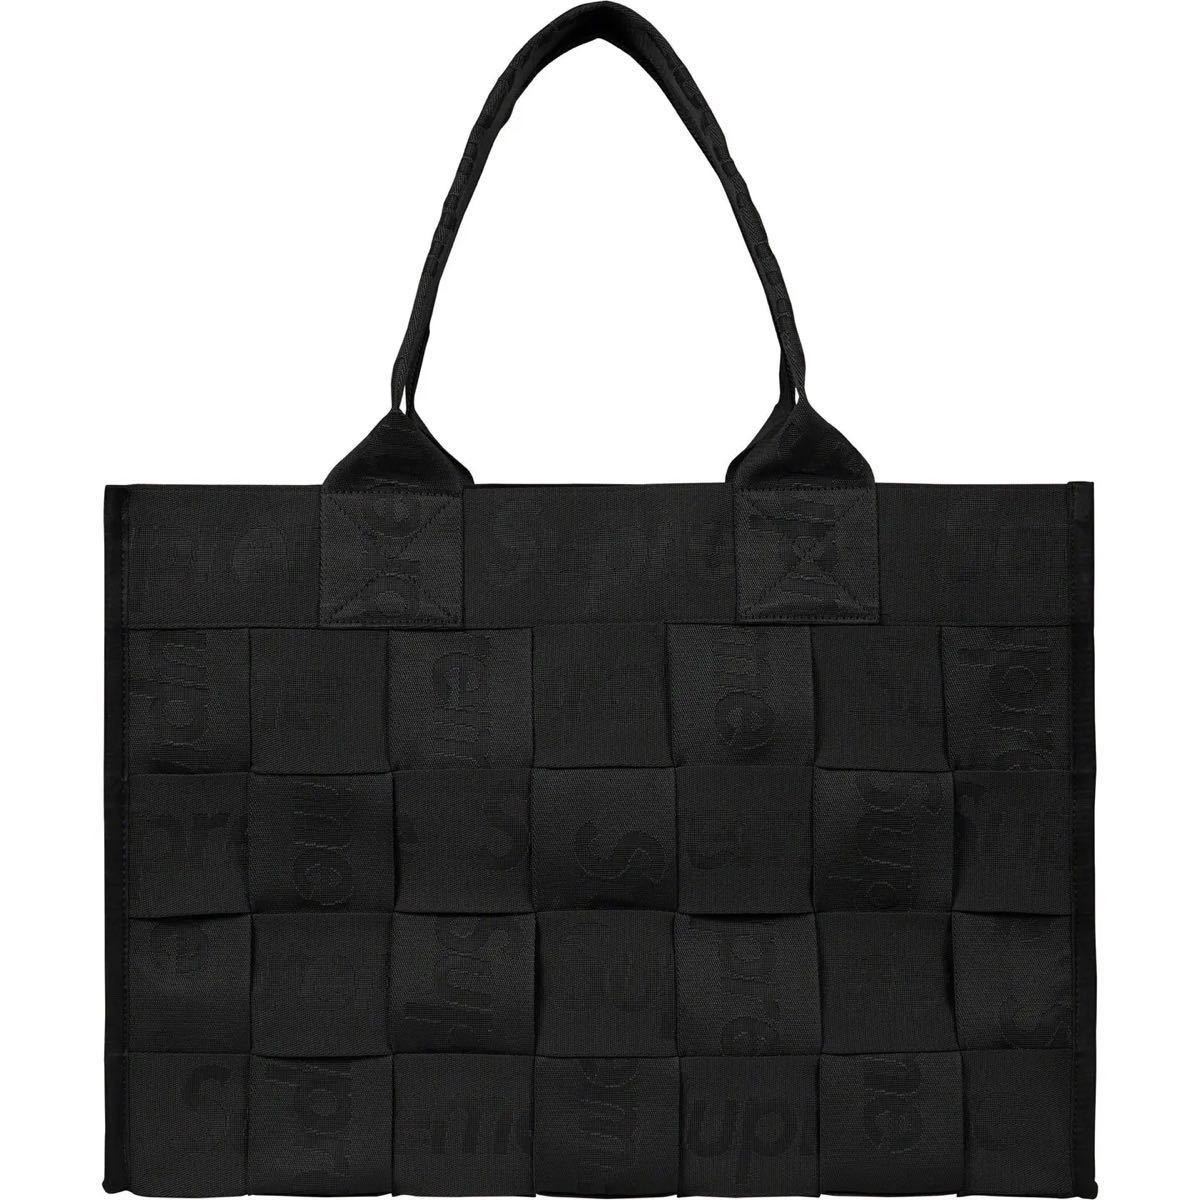 23SS 新品 Supreme Woven Large Tote Bag シュプリーム ウーブン トートバッグ ブラック Black 黒 オンライン購入 バックパック バックの画像3